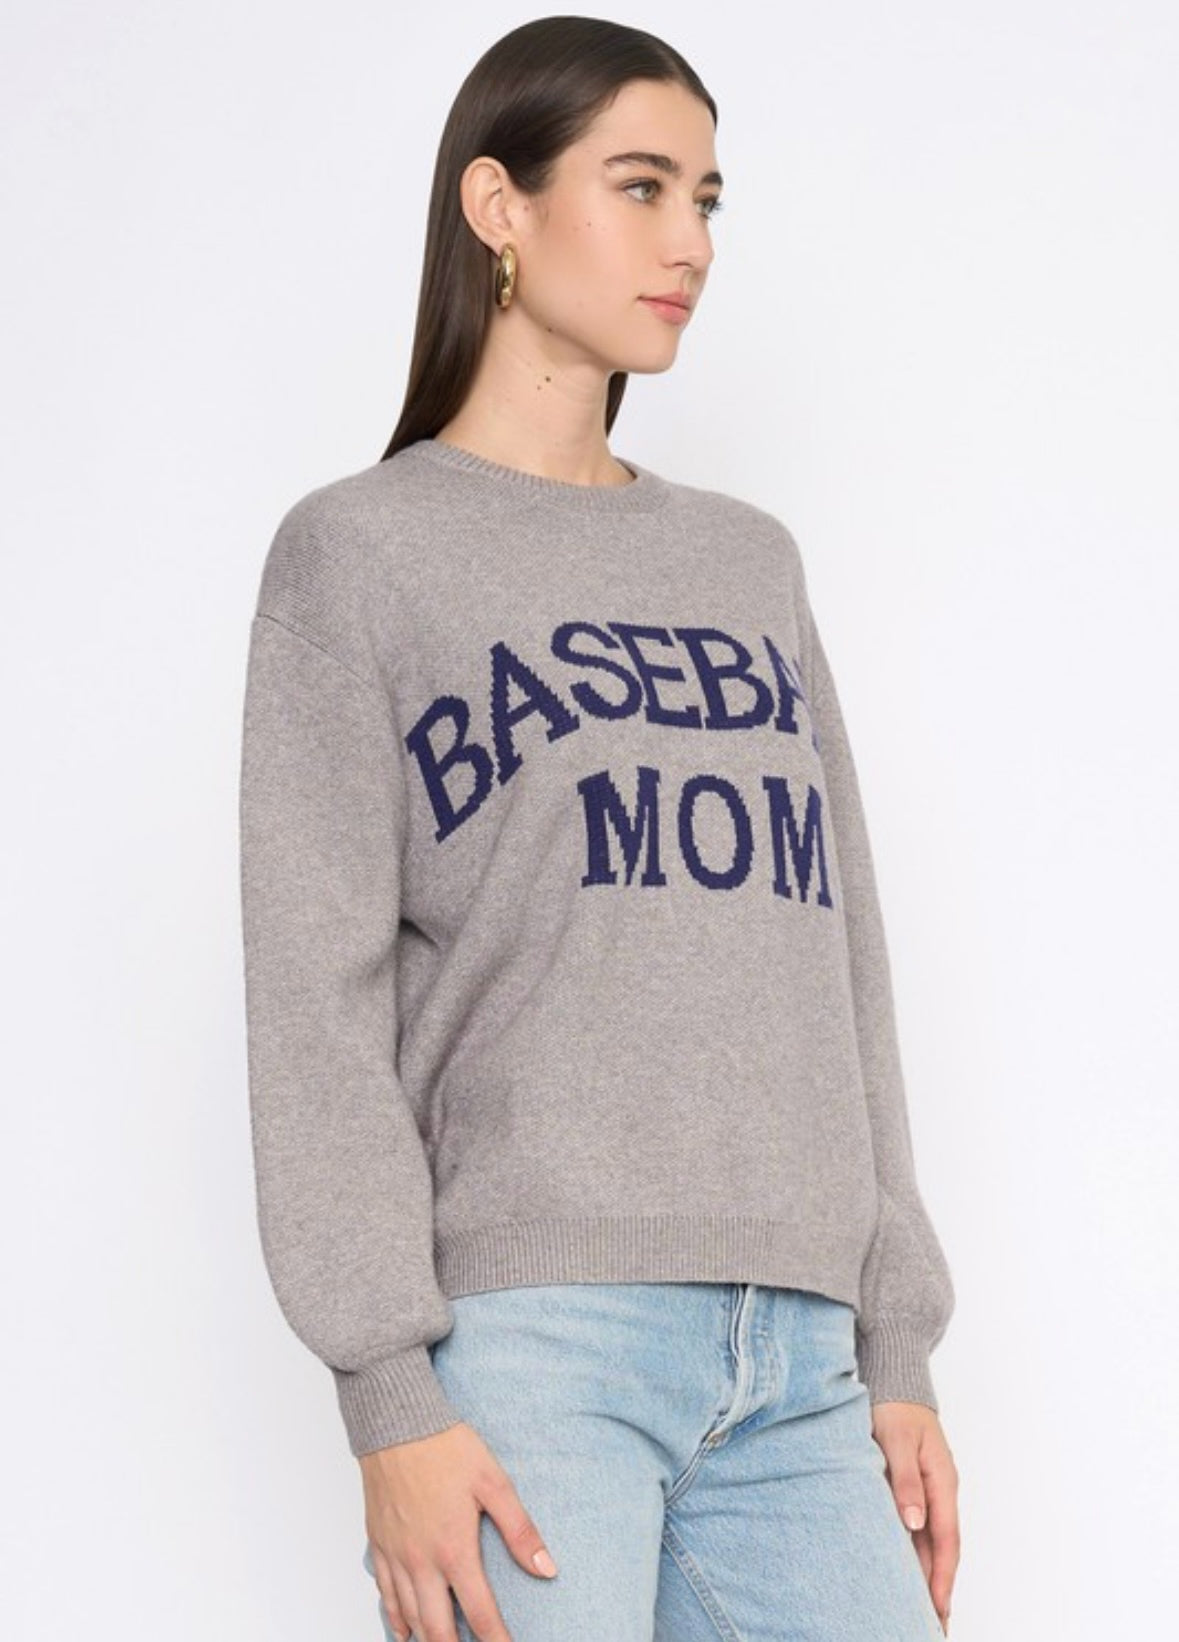 Baseball Mom Sweater